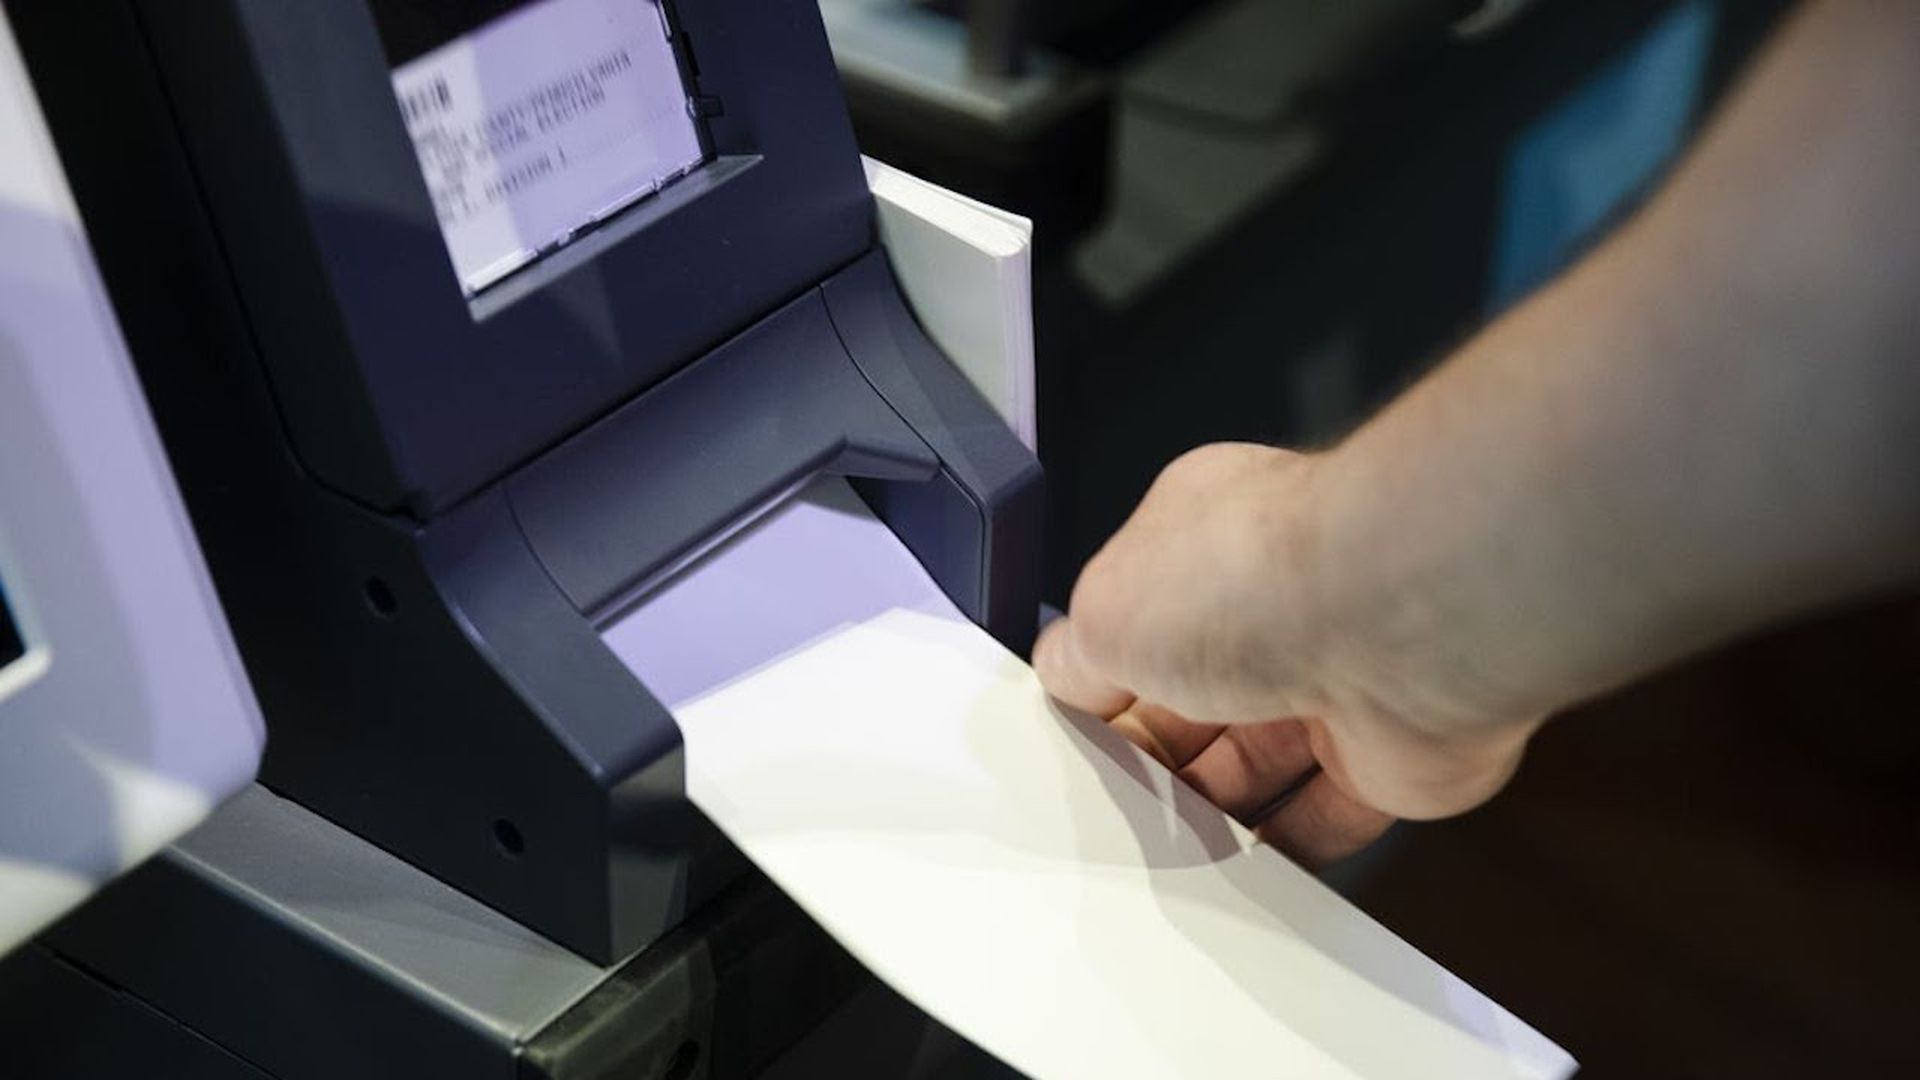 Voting machine with older software